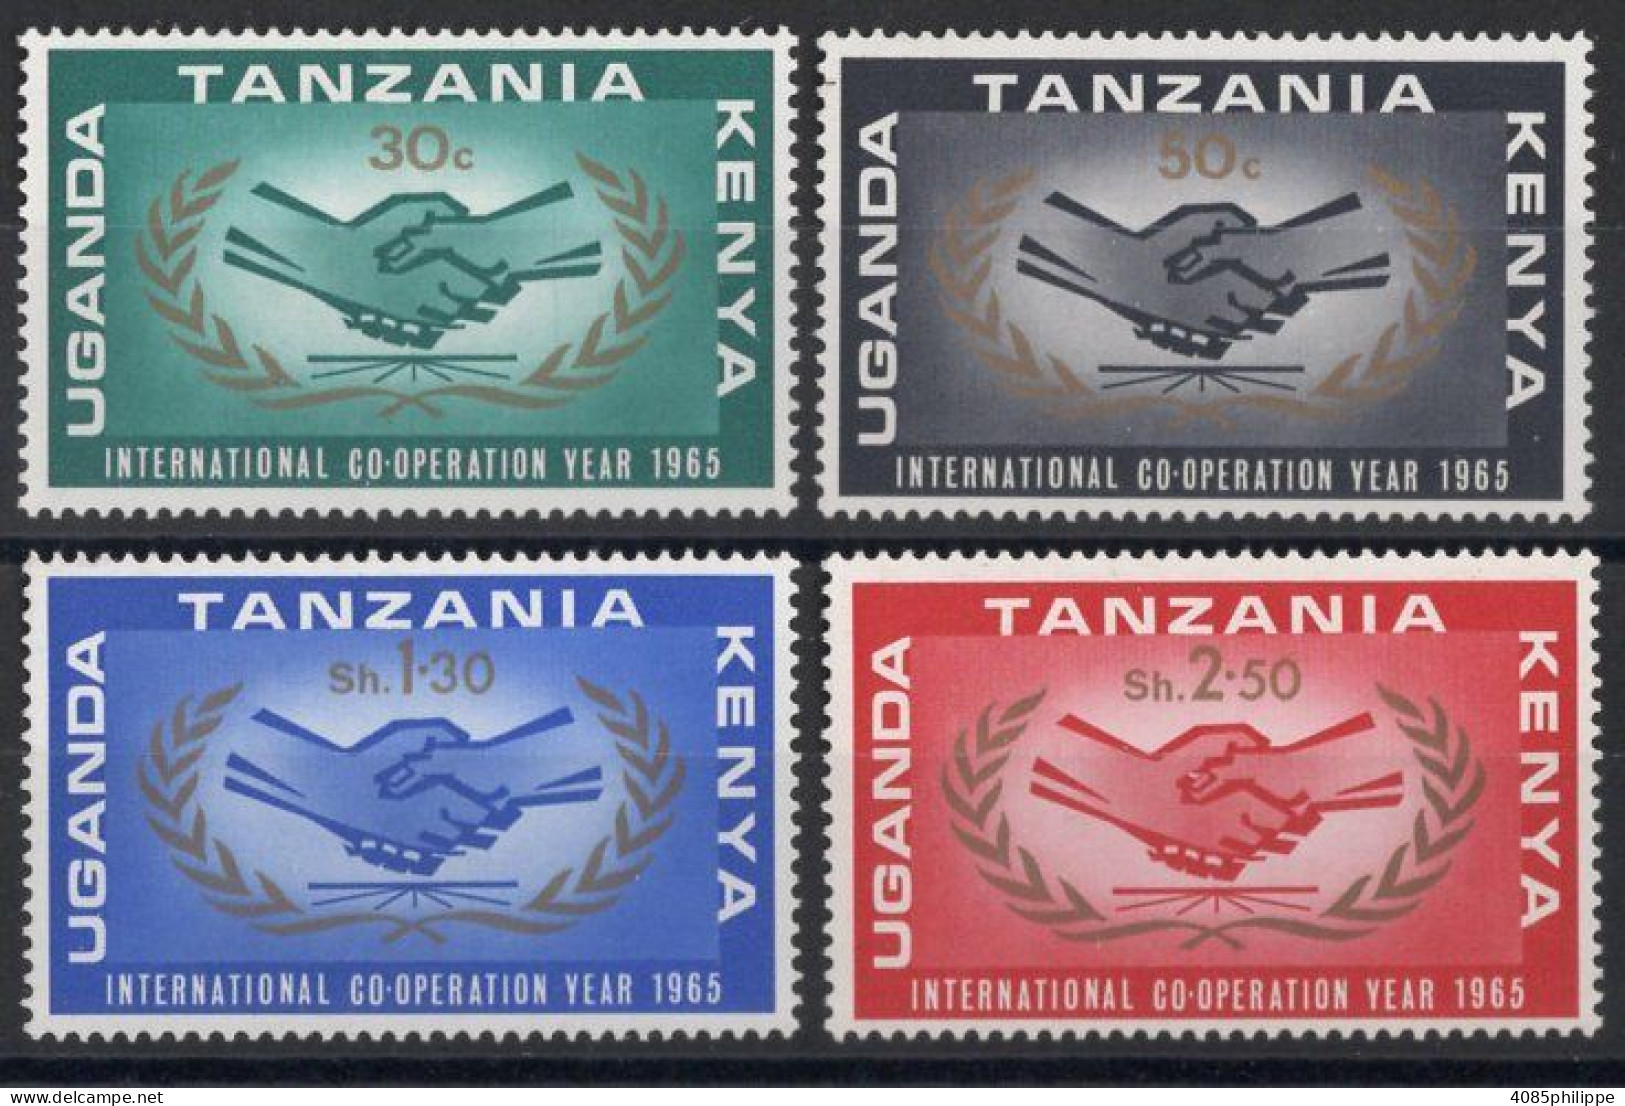 EST-AFRICAIN Timbres-Poste N°141** à 144** Neufs Sans Charnières TB Cote : 2.75€ - Kenya, Ouganda & Tanzanie